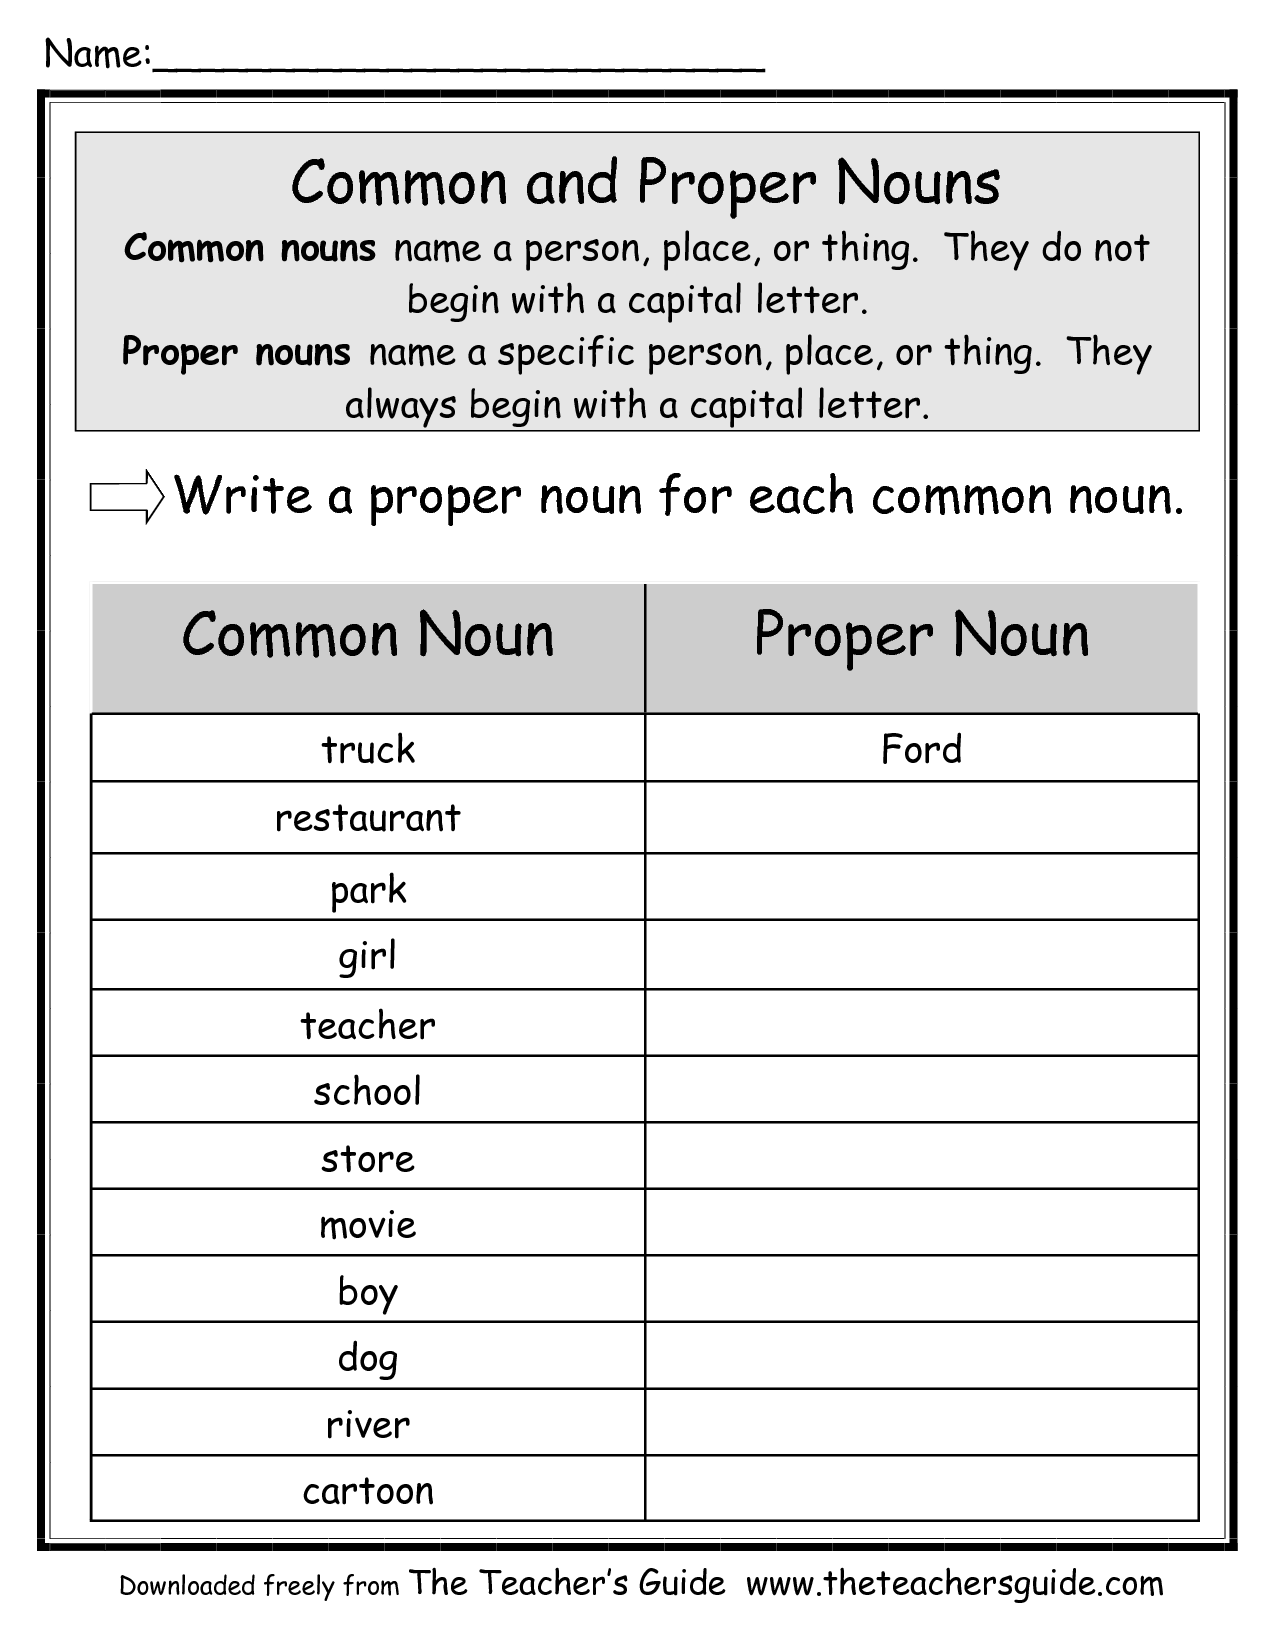 Common Noun And Proper Noun Worksheets For 5th Grade